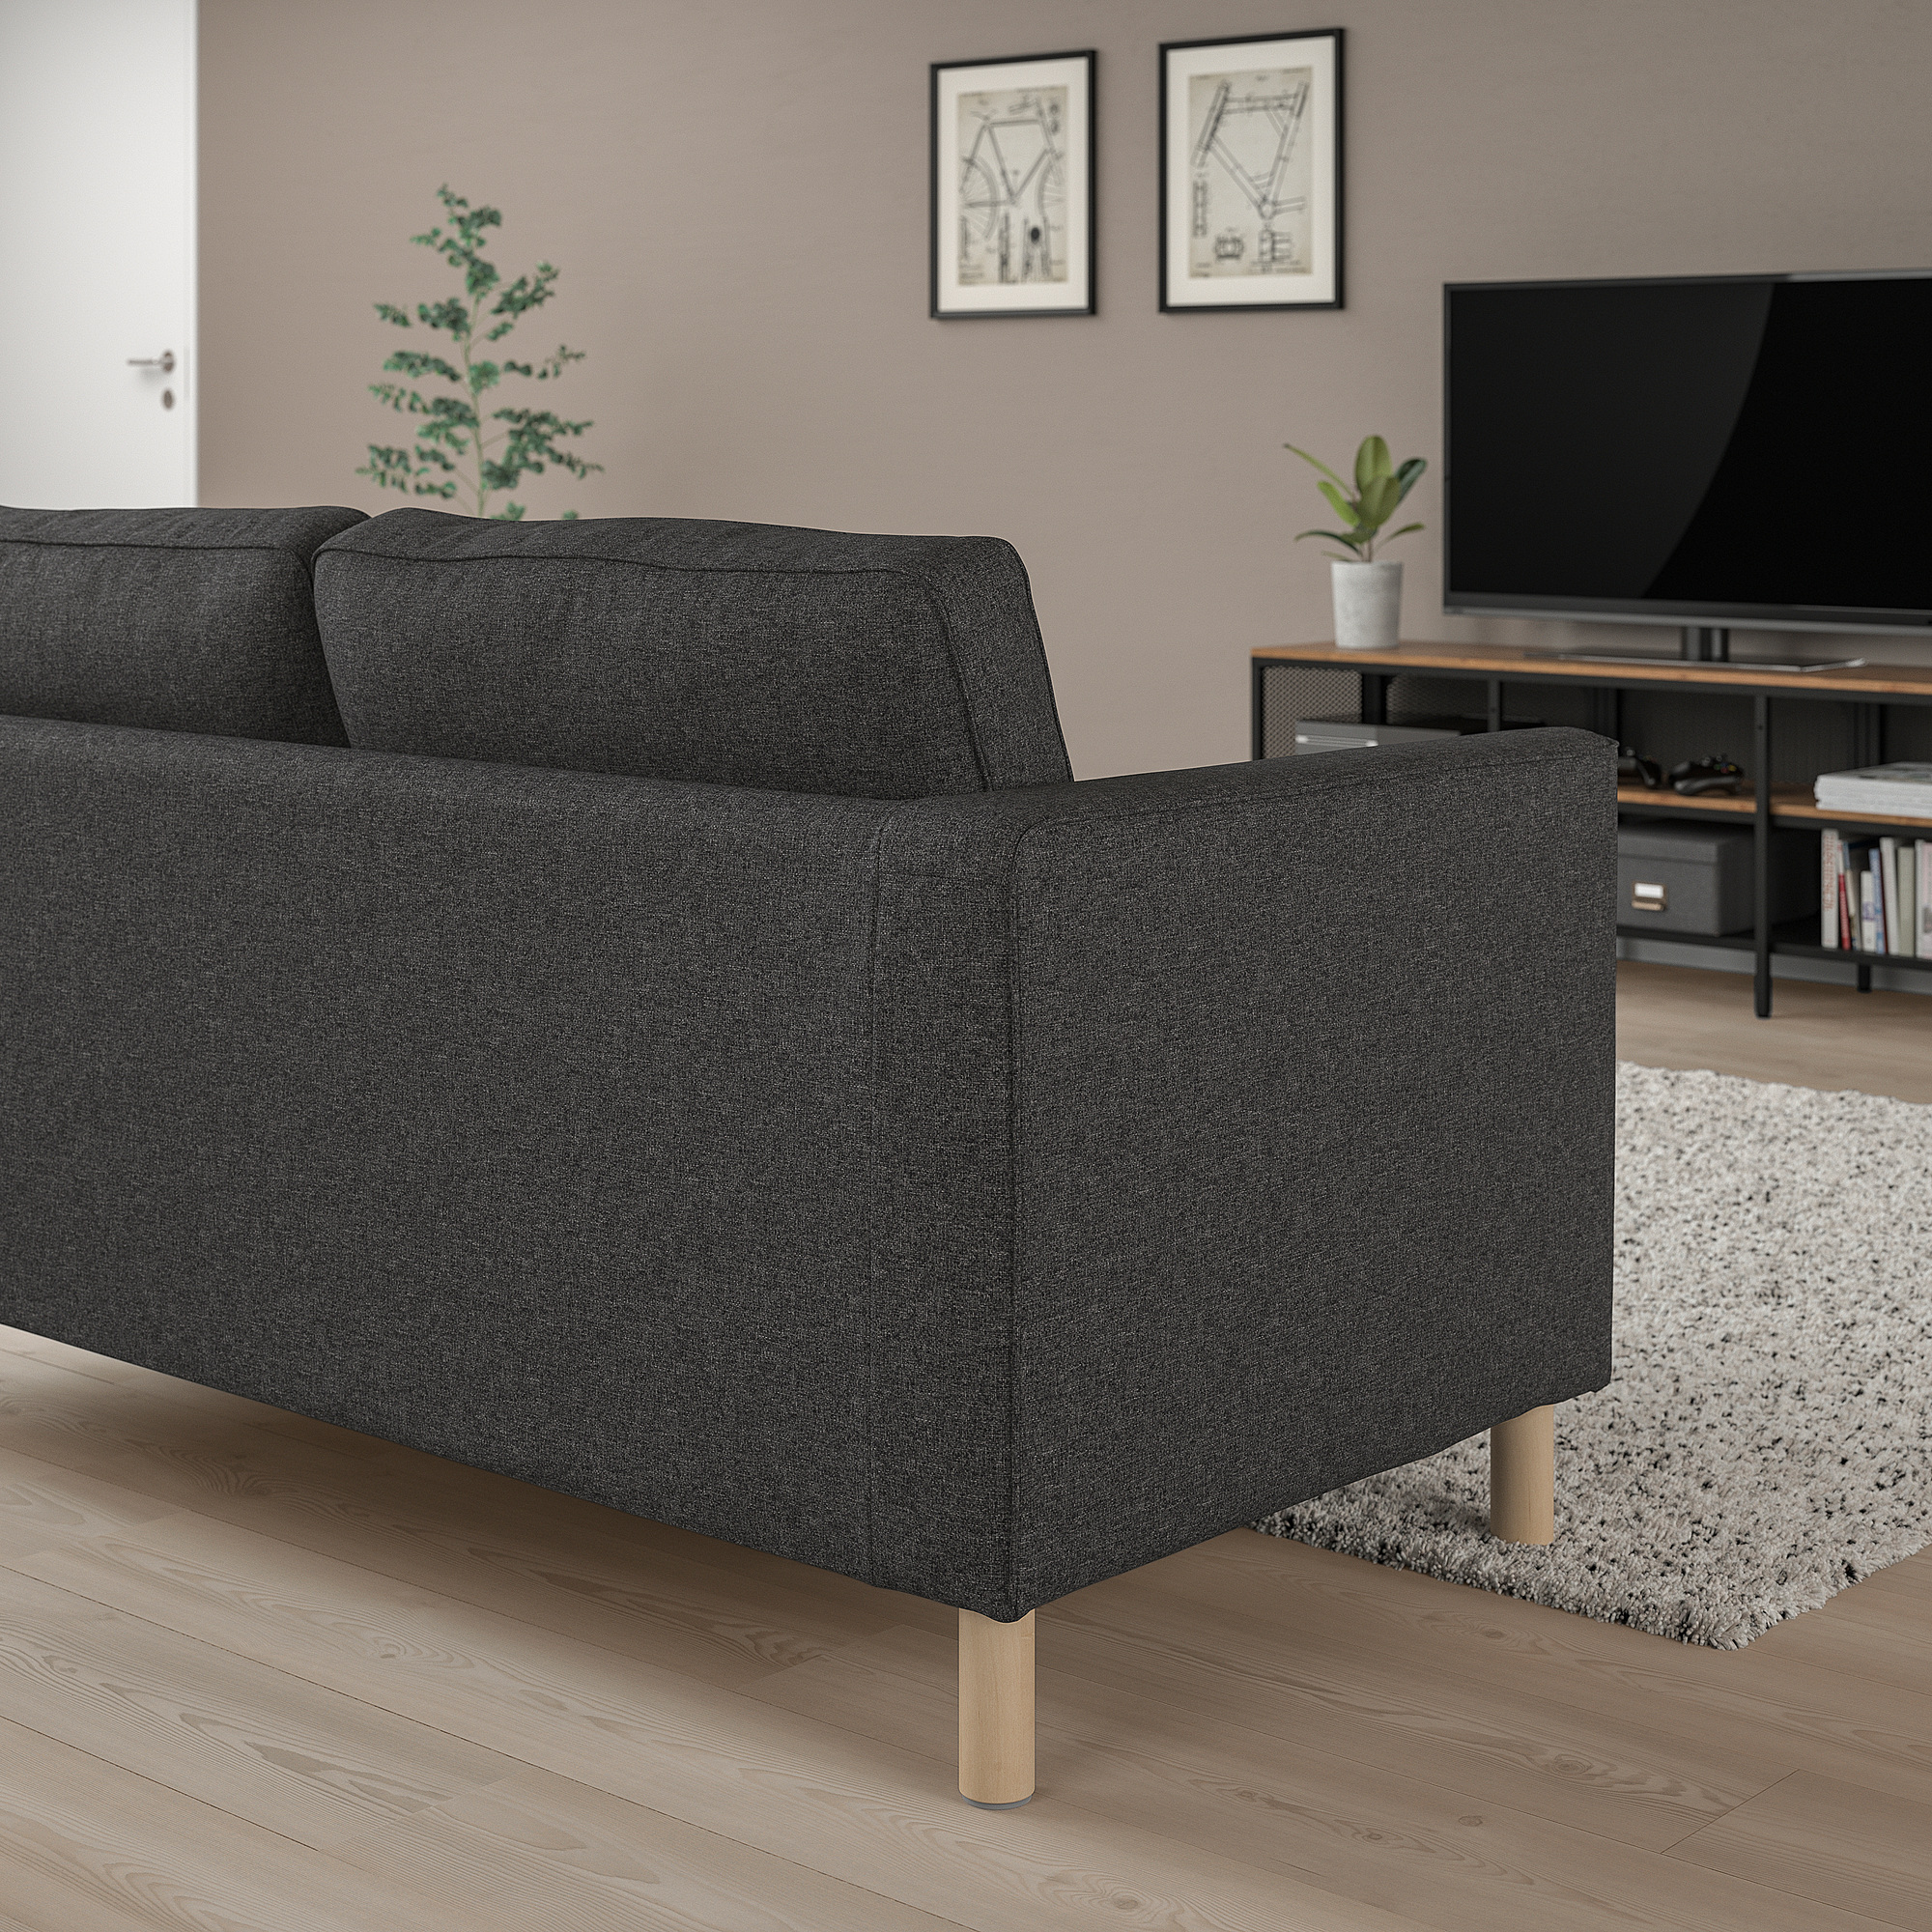 PÄRUP 3-seat sofa